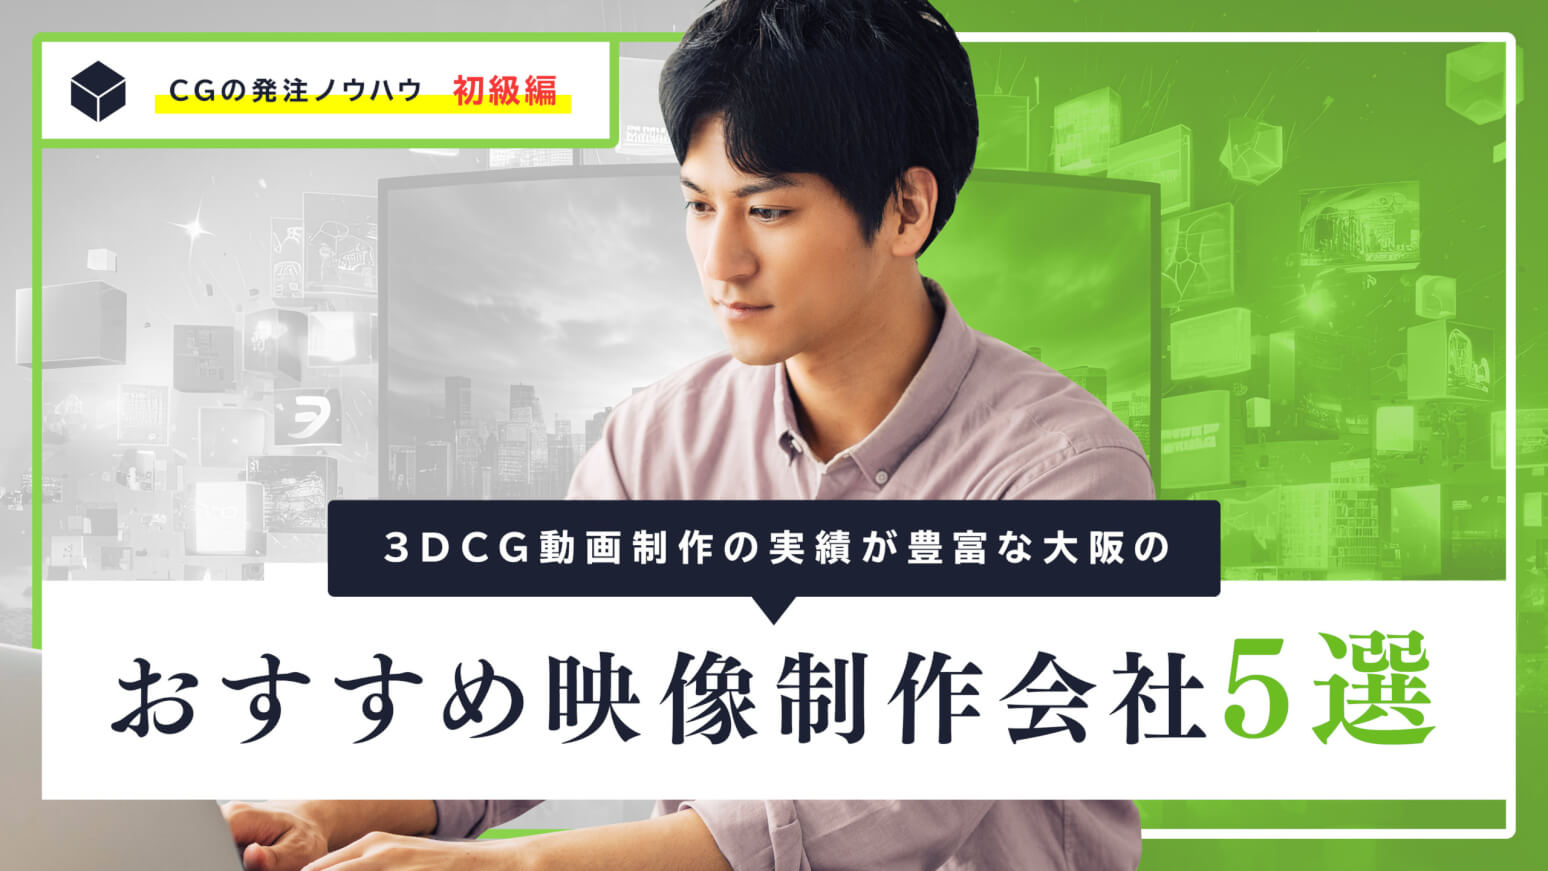 3DCG動画制作の実績が豊富な大阪のおすすめ映像制作会社5選